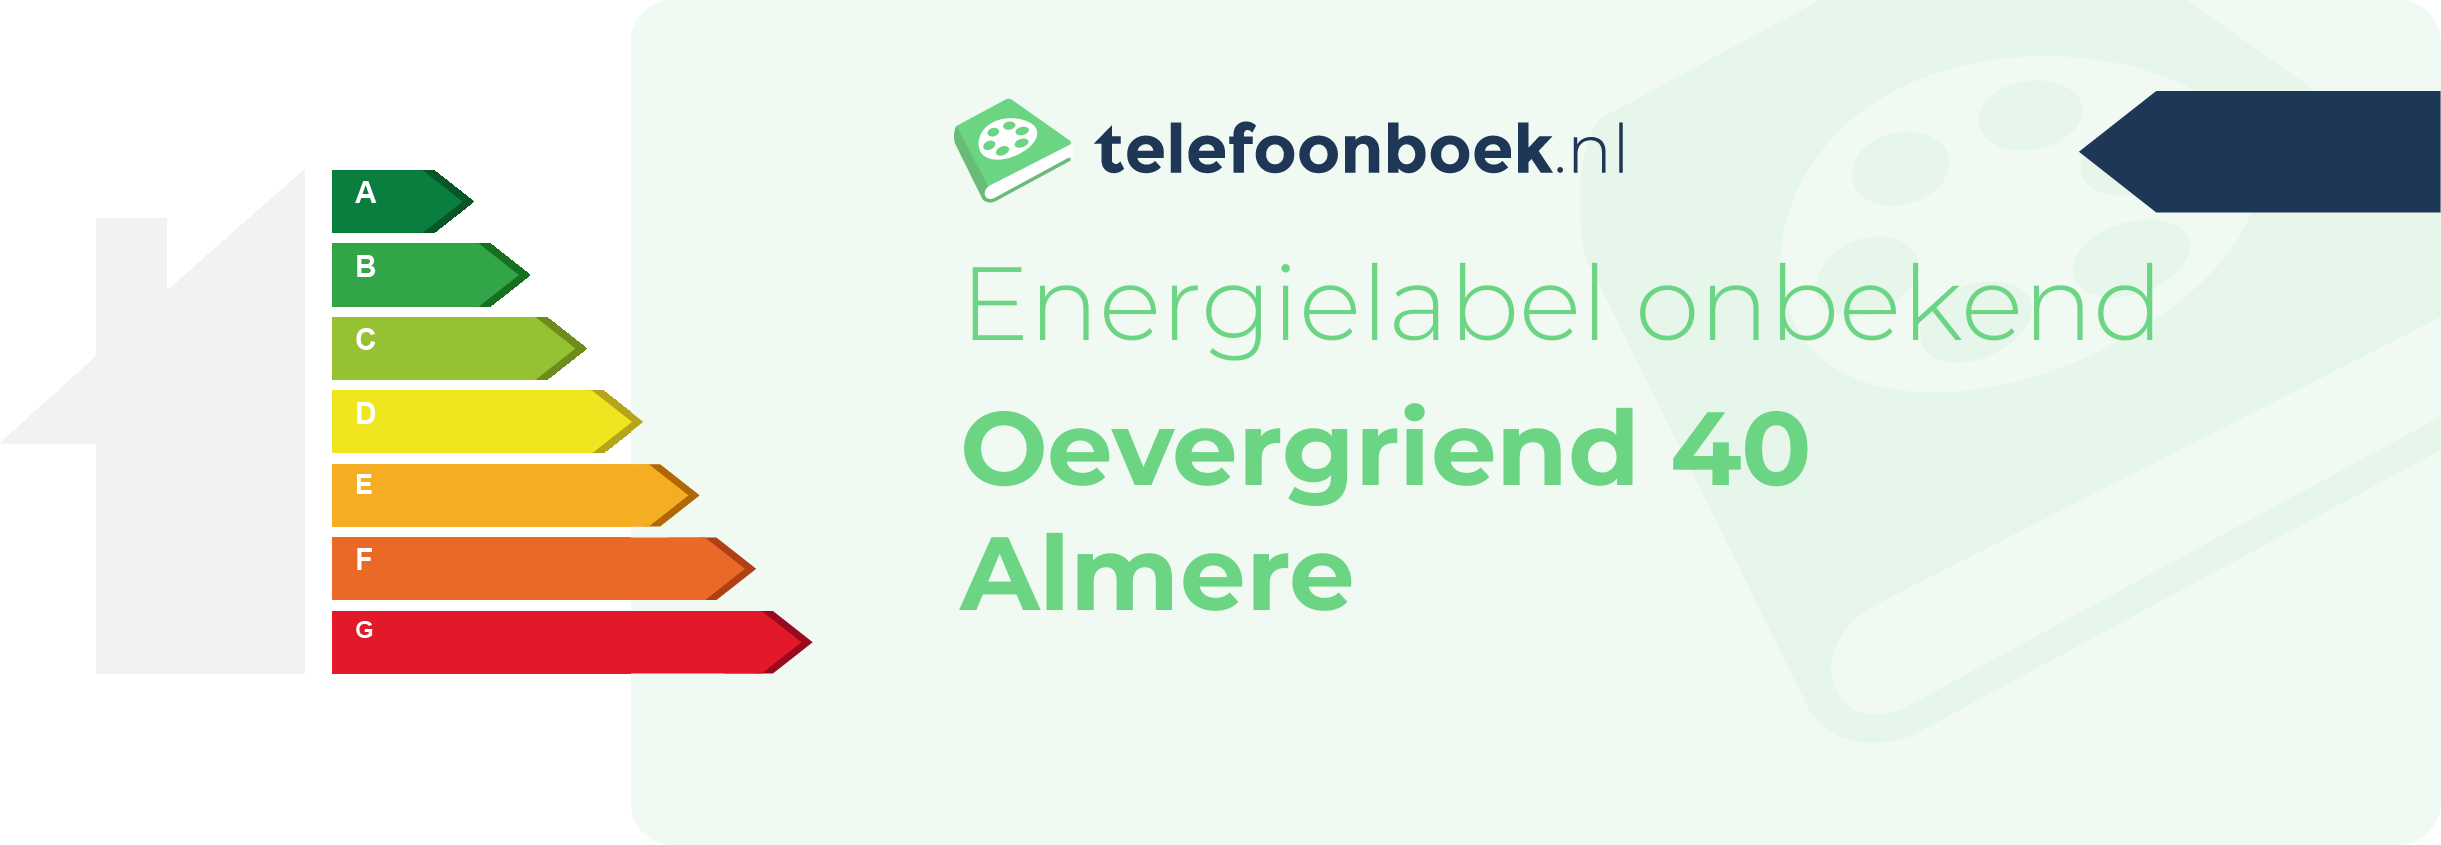 Energielabel Oevergriend 40 Almere